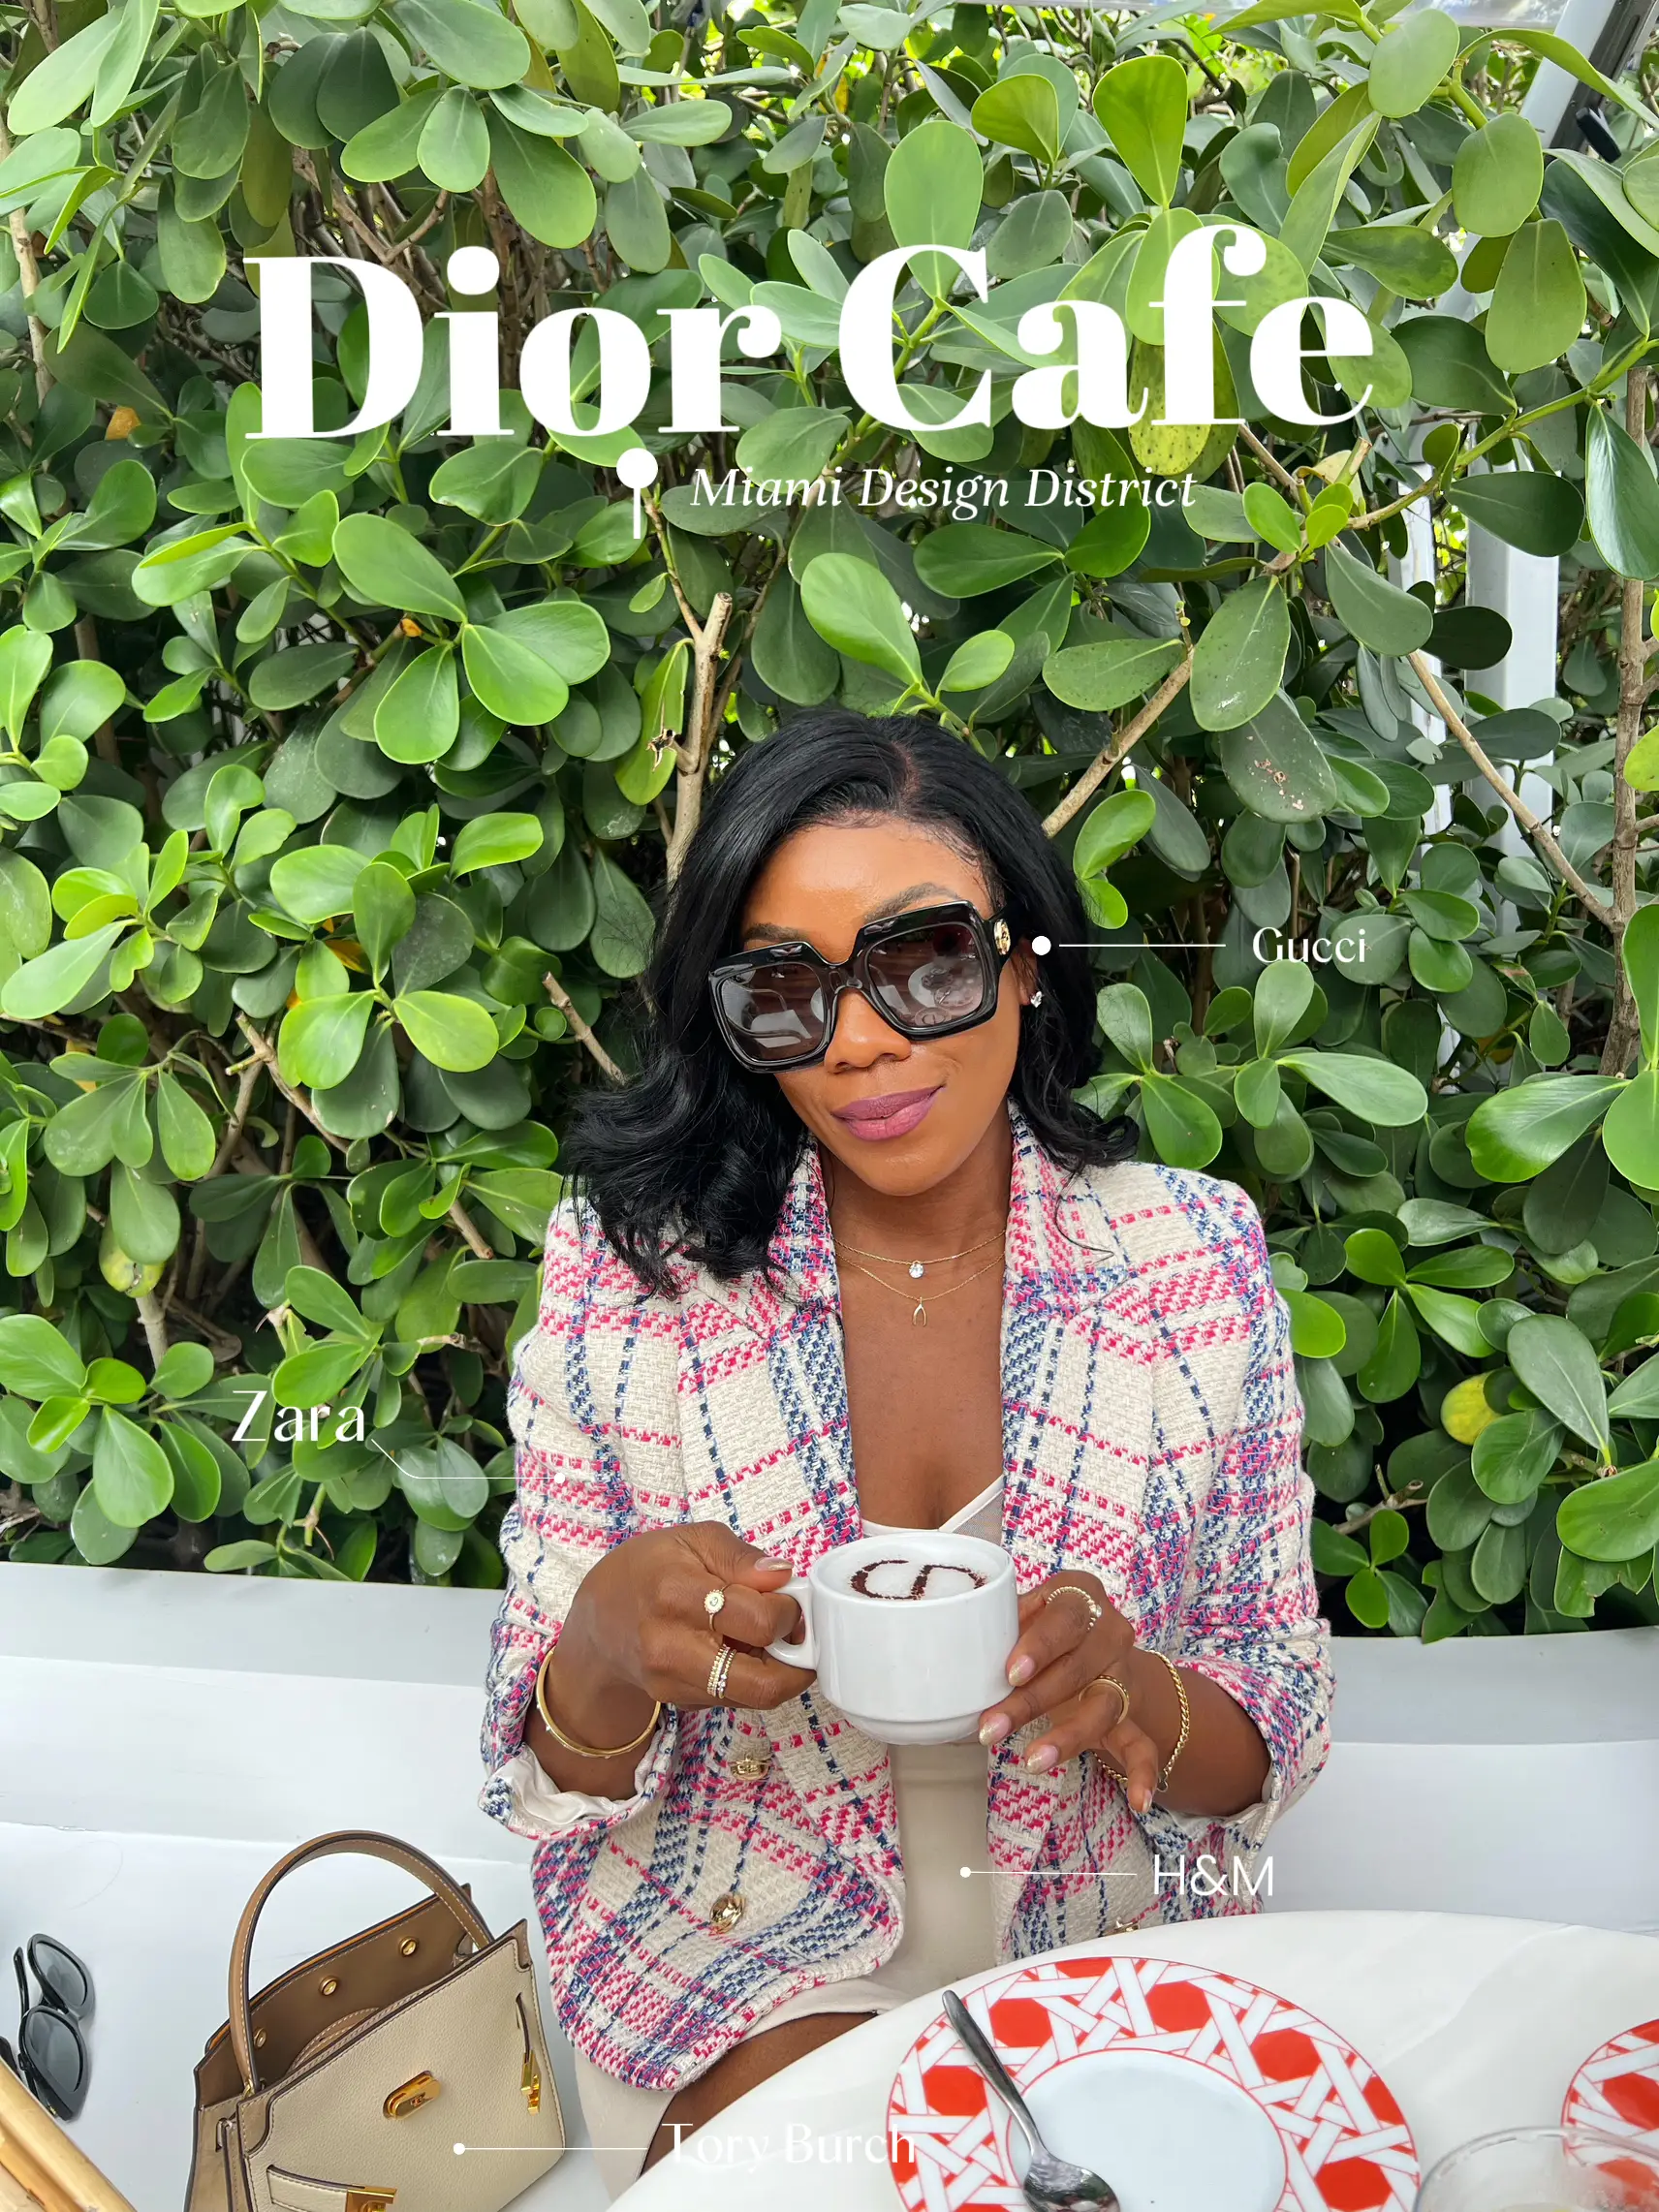 Dior Cafe Opens At Dior Miami Design District